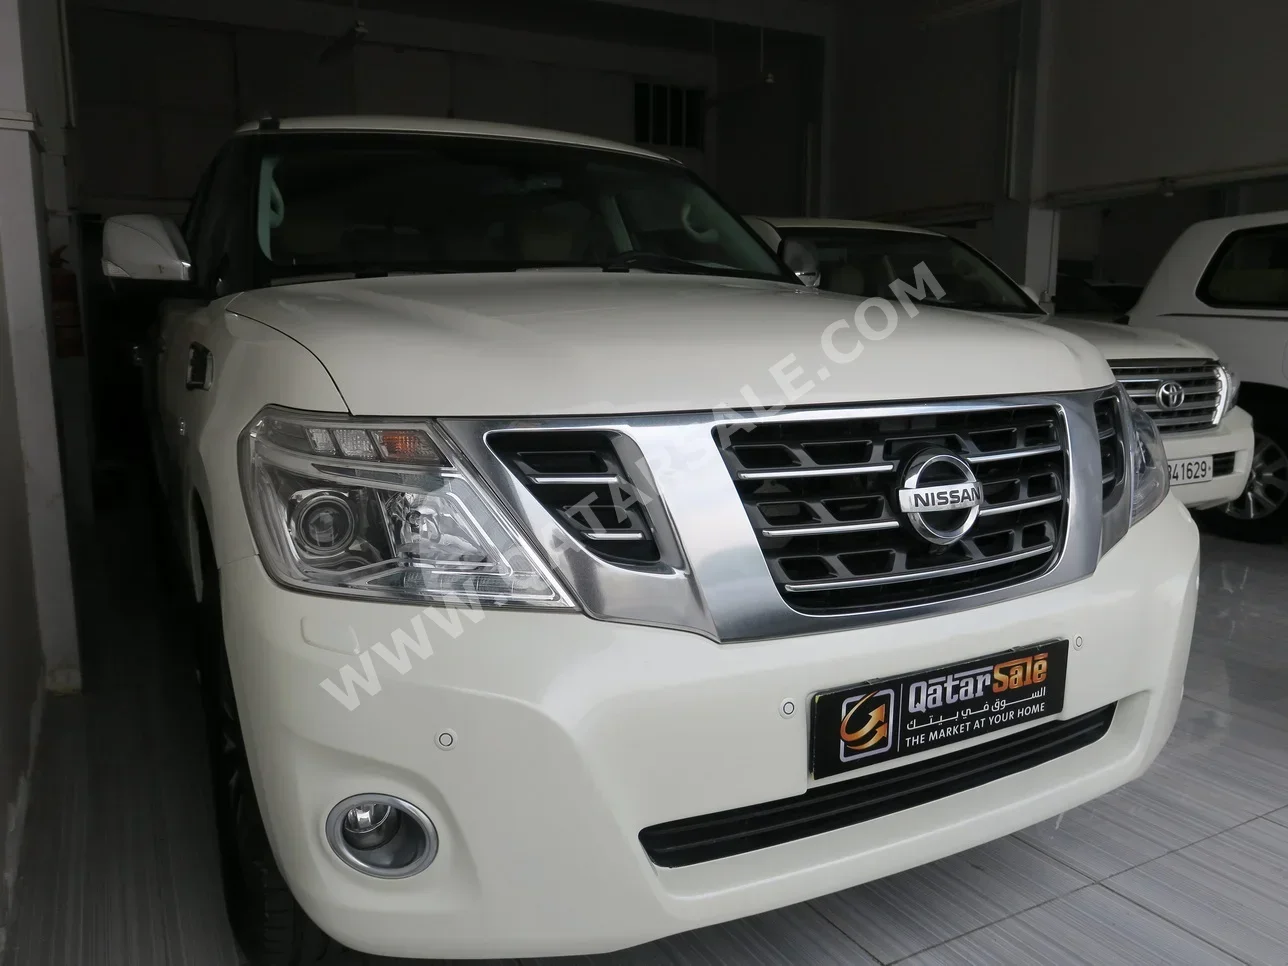 Nissan  Patrol  Platinum  2015  Automatic  223,000 Km  8 Cylinder  Four Wheel Drive (4WD)  SUV  White